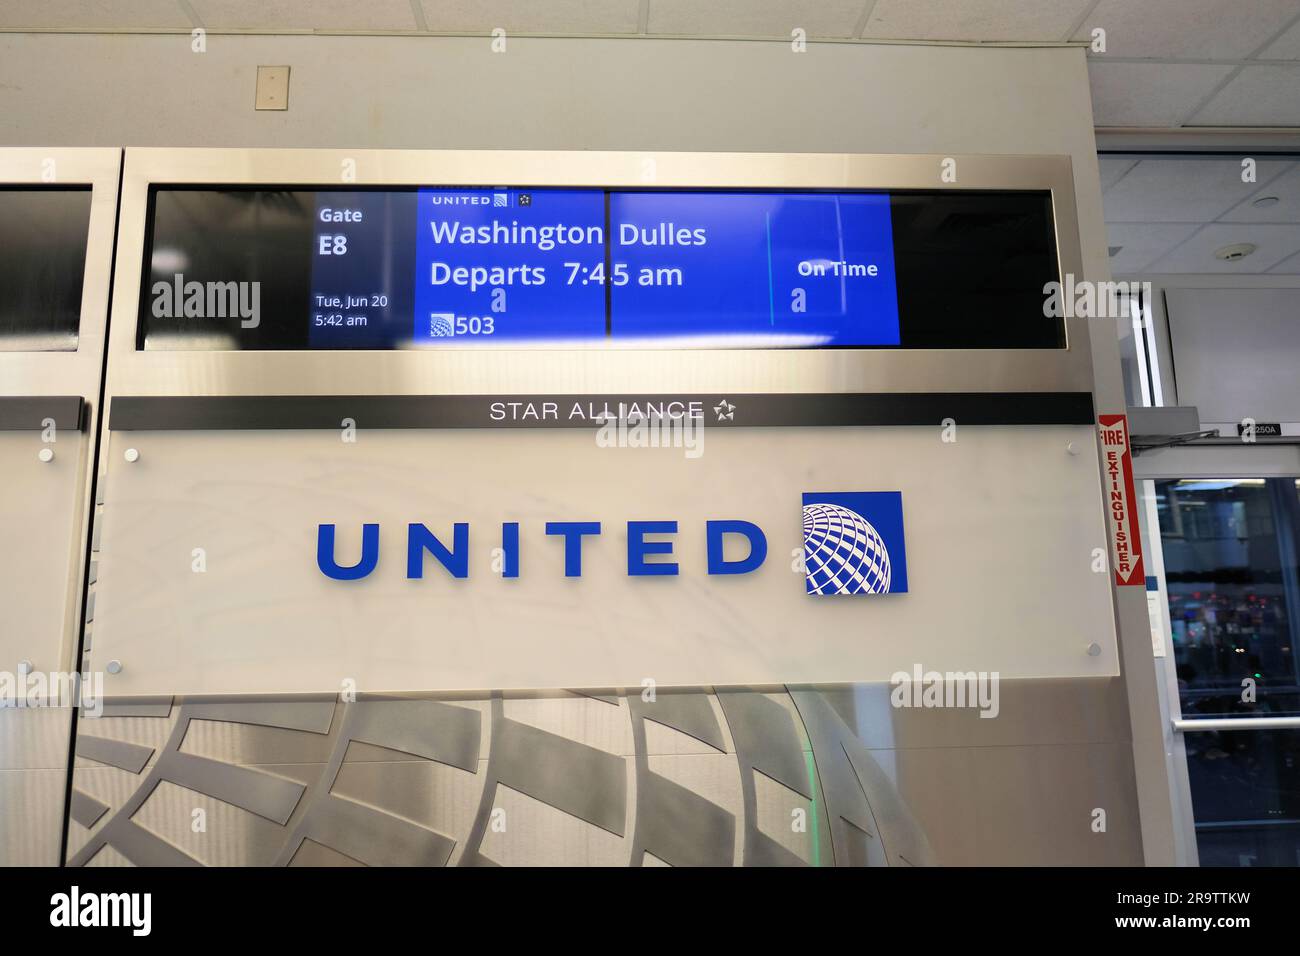 Informationsmonitor an Gate E8, Terminal E, am George Bush International Airport in Houston, Texas, mit Abfluginformationen für Washington Dulles. Stockfoto